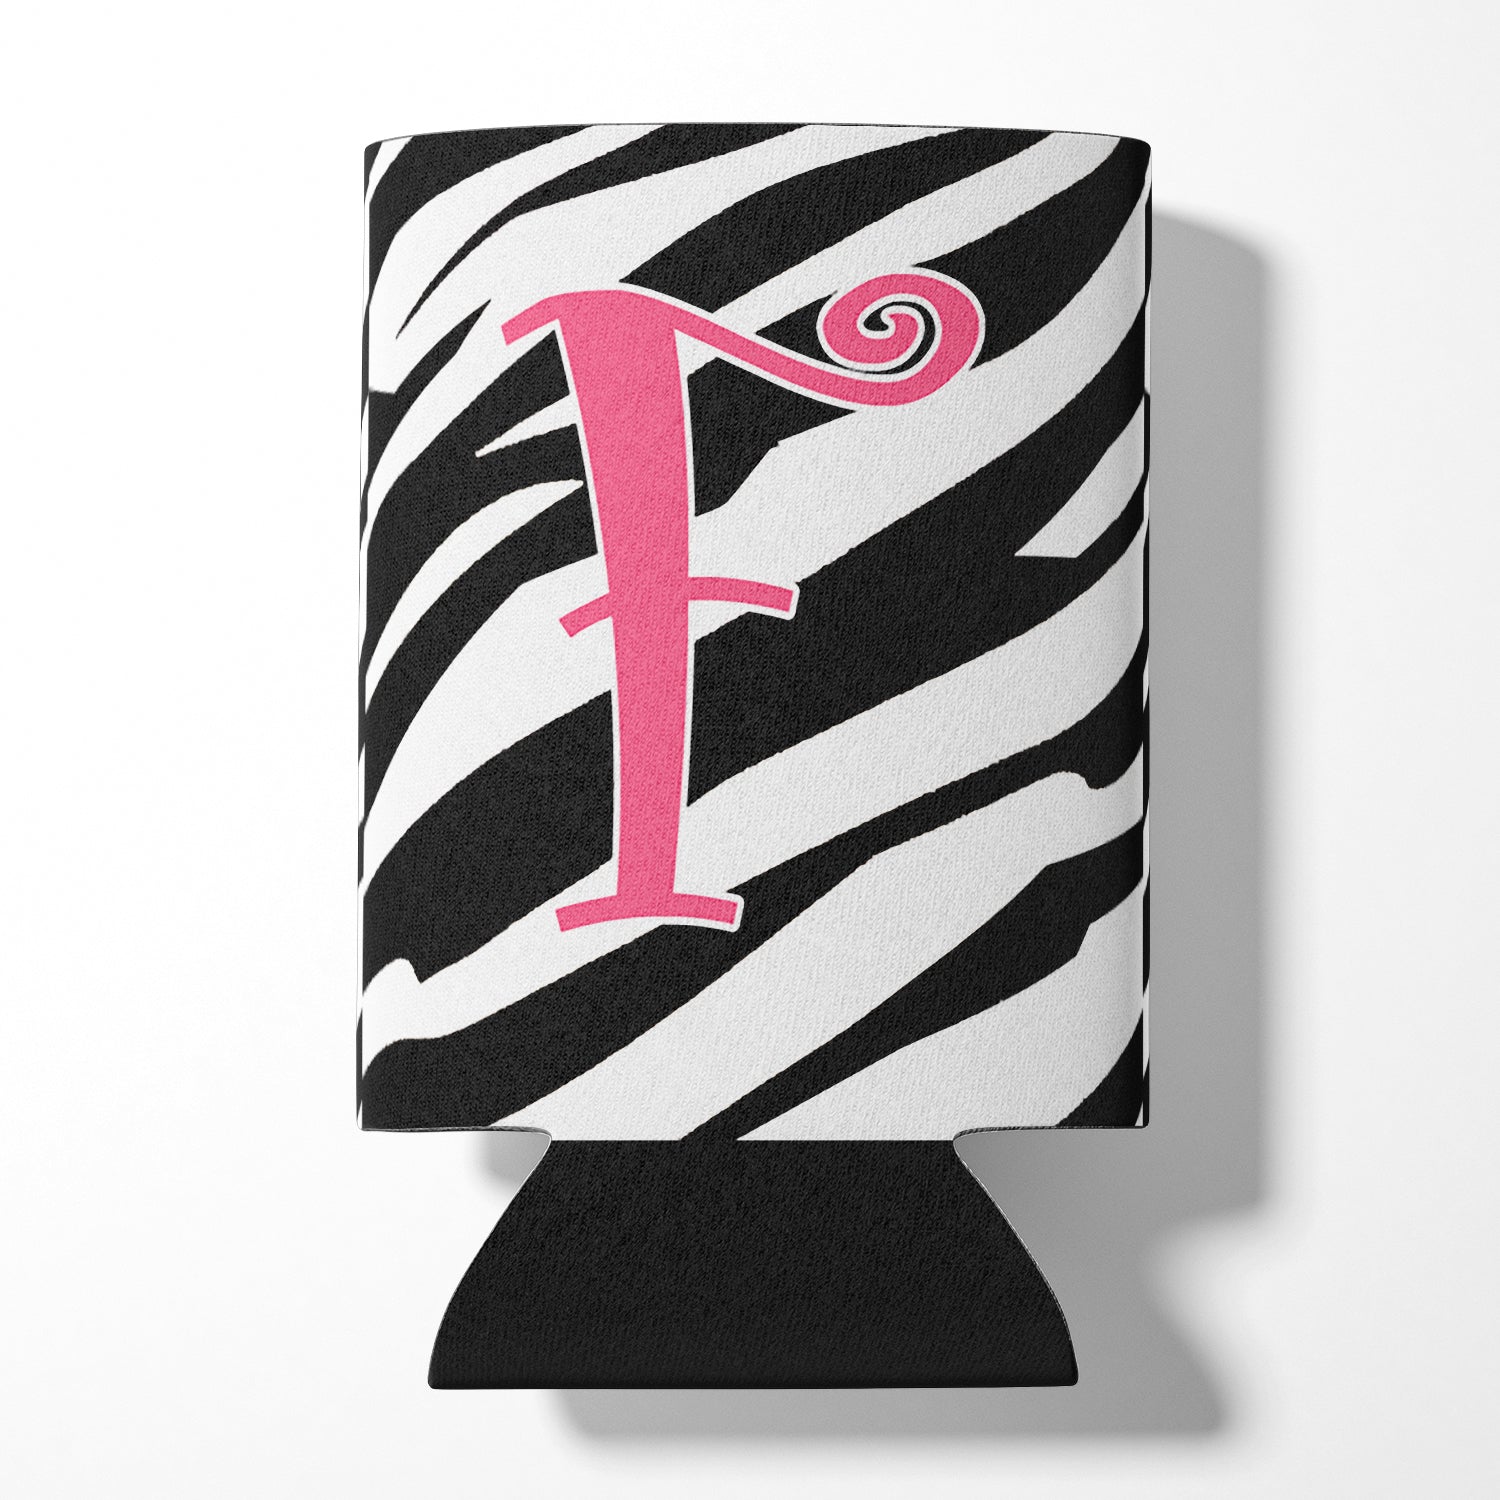 Lettre F Initial Monogram - Zebra Stripe et Pink Can or Bottle Beverage Insulator Hugger